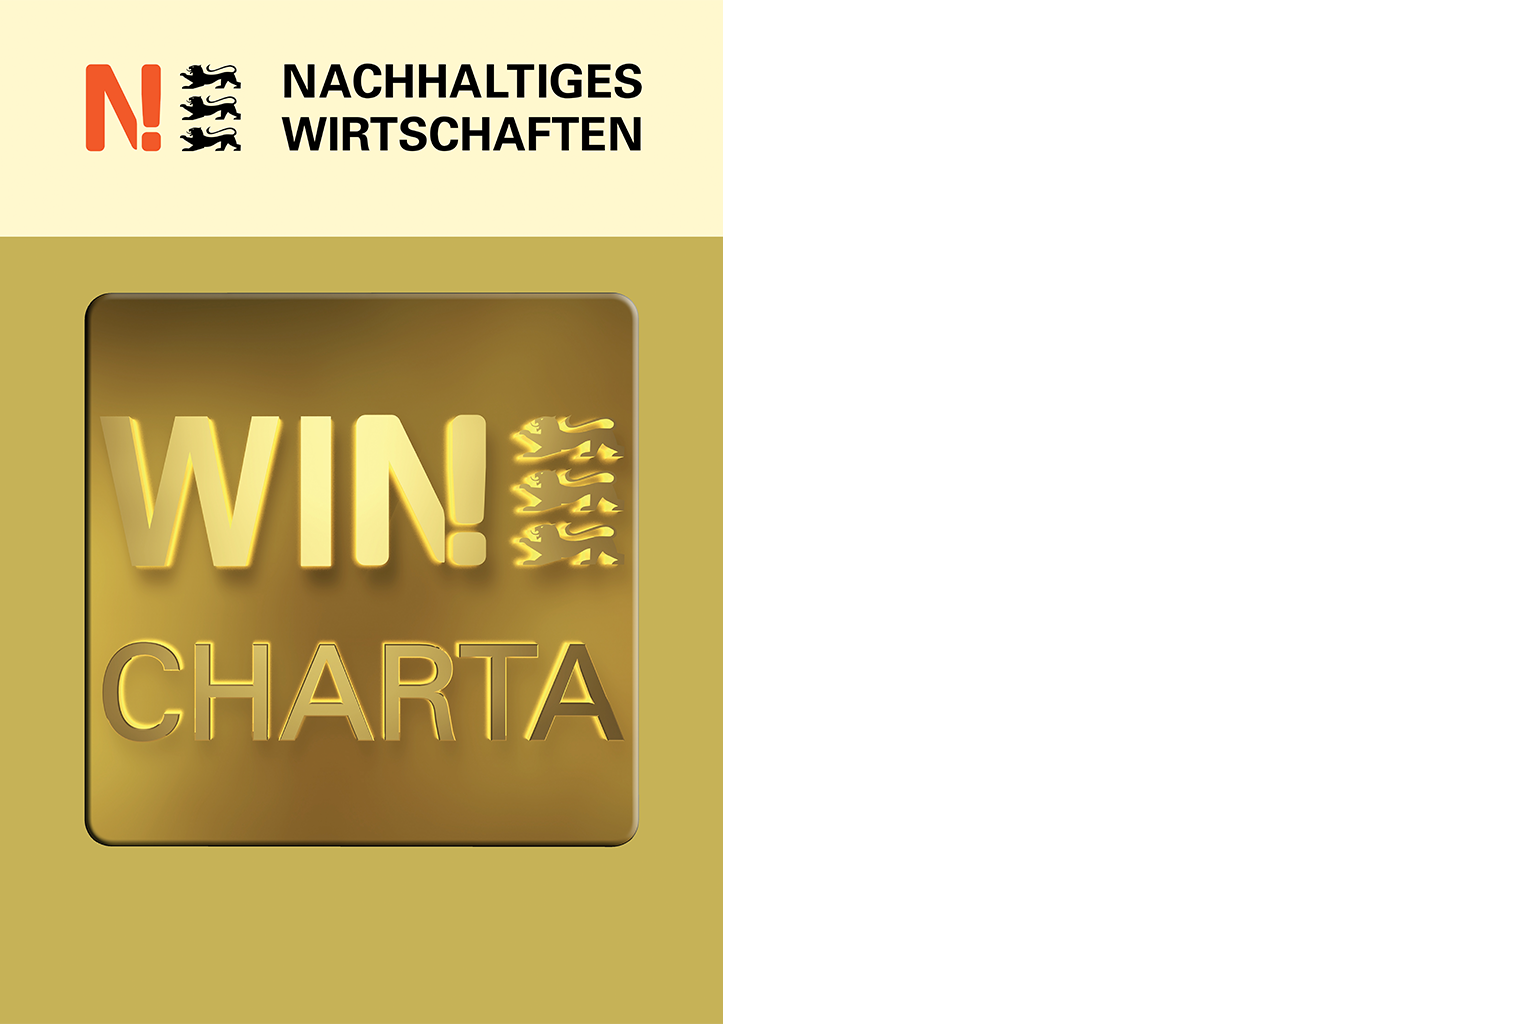 [Translate to English:] Nachhaltigkeit Zertifikat WIN-Charta